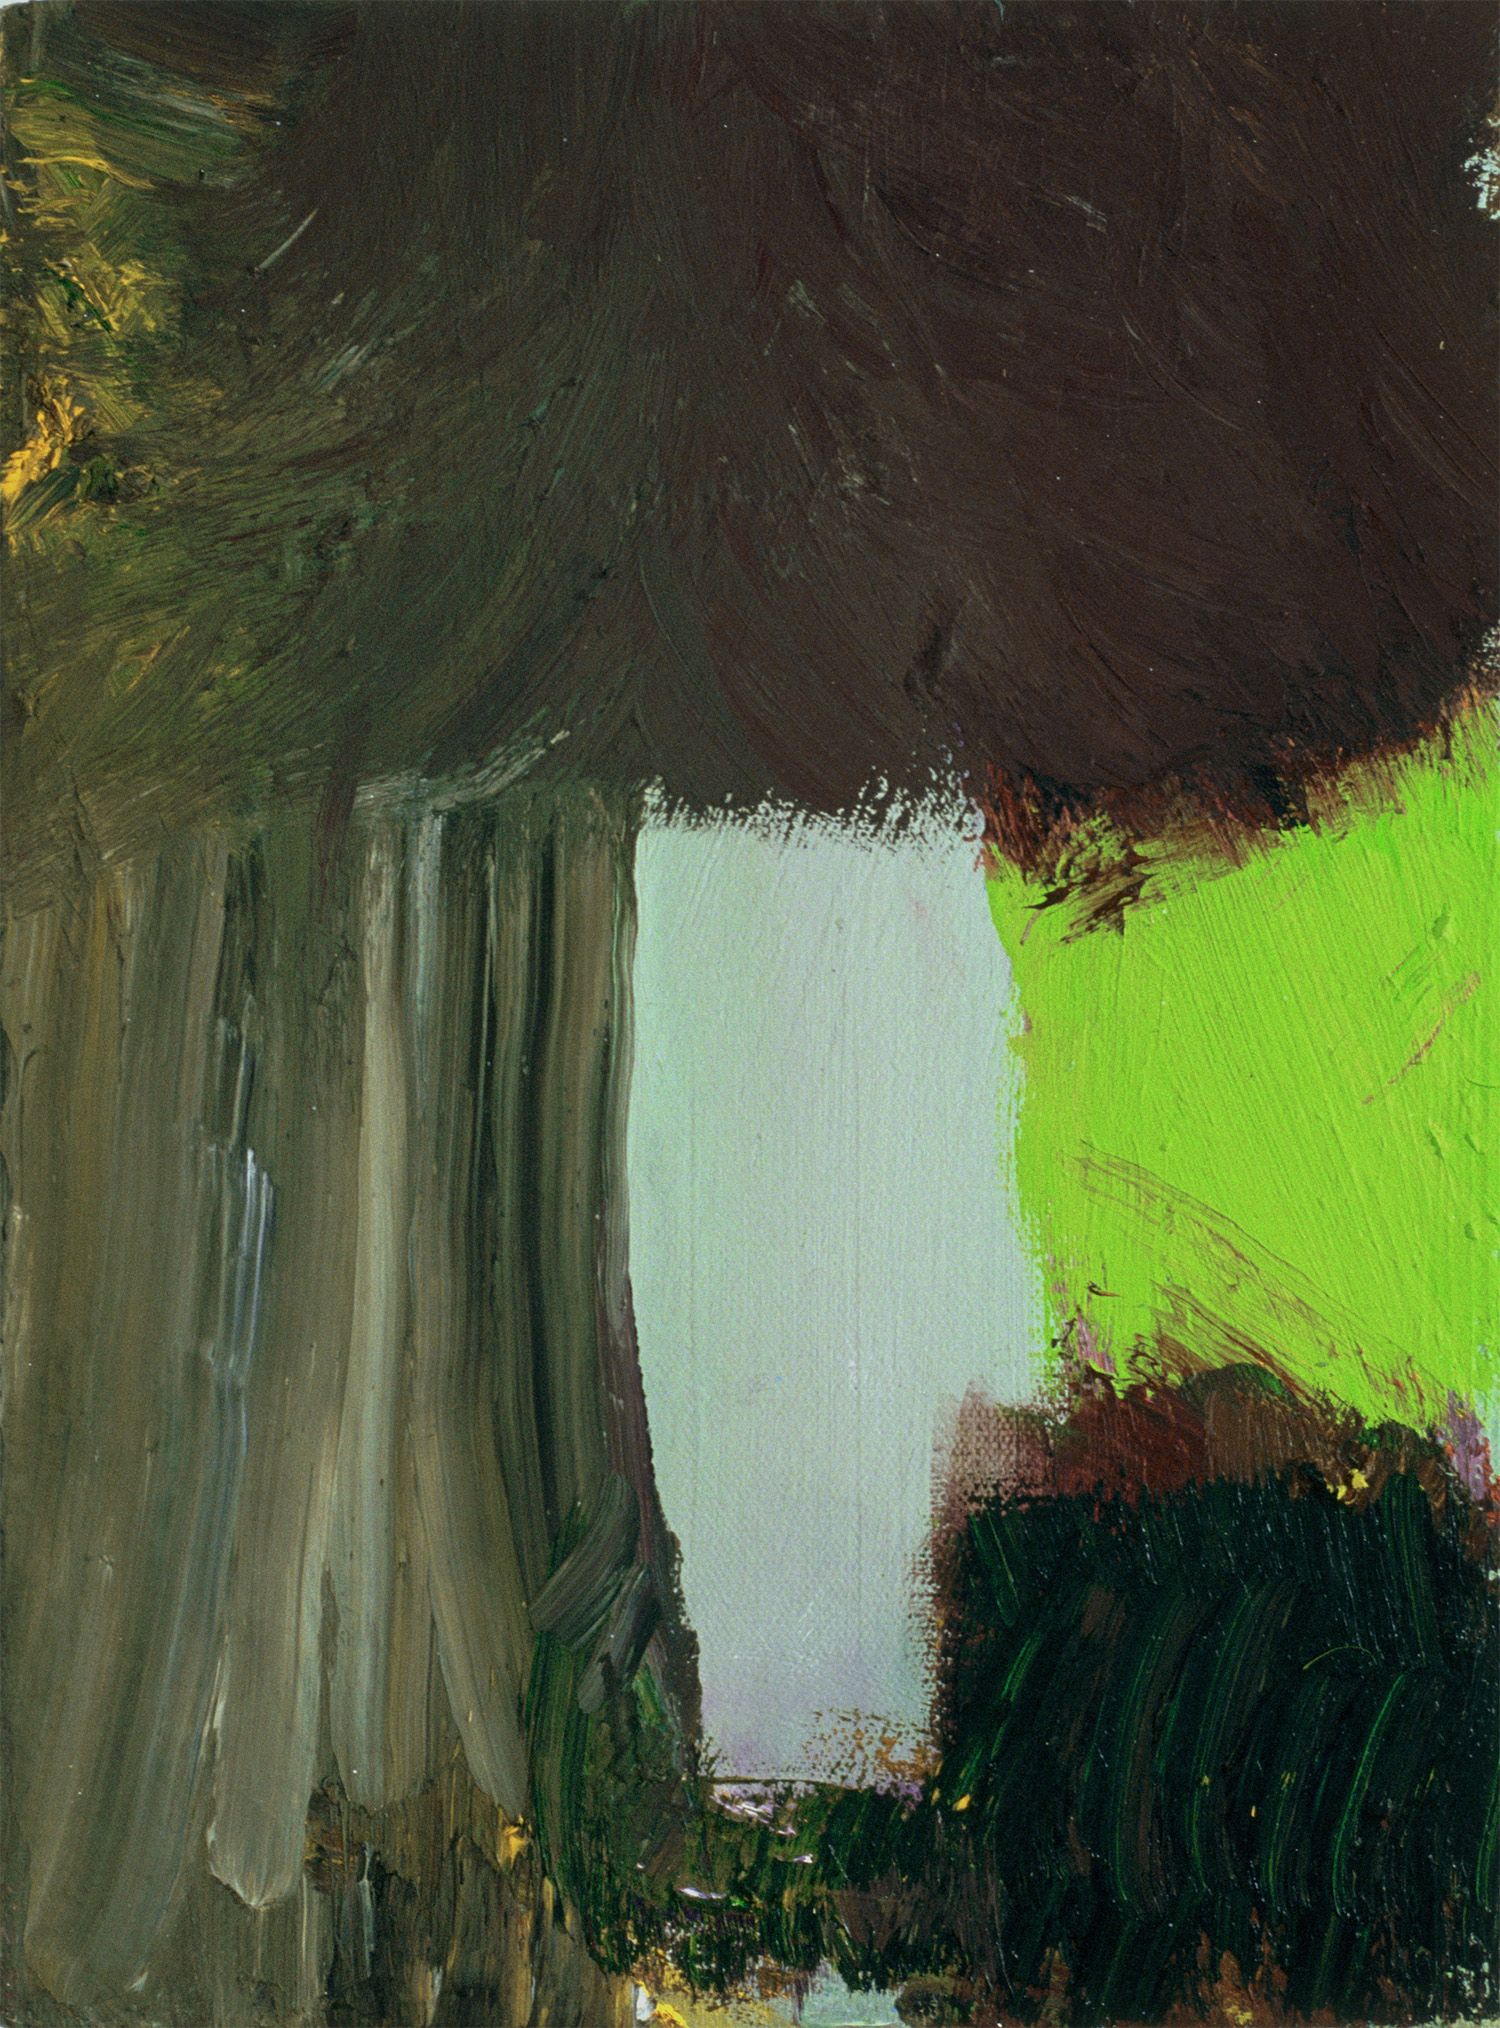   Davis-Besse , 2005, oil on canvas, 12 x 10 inches 